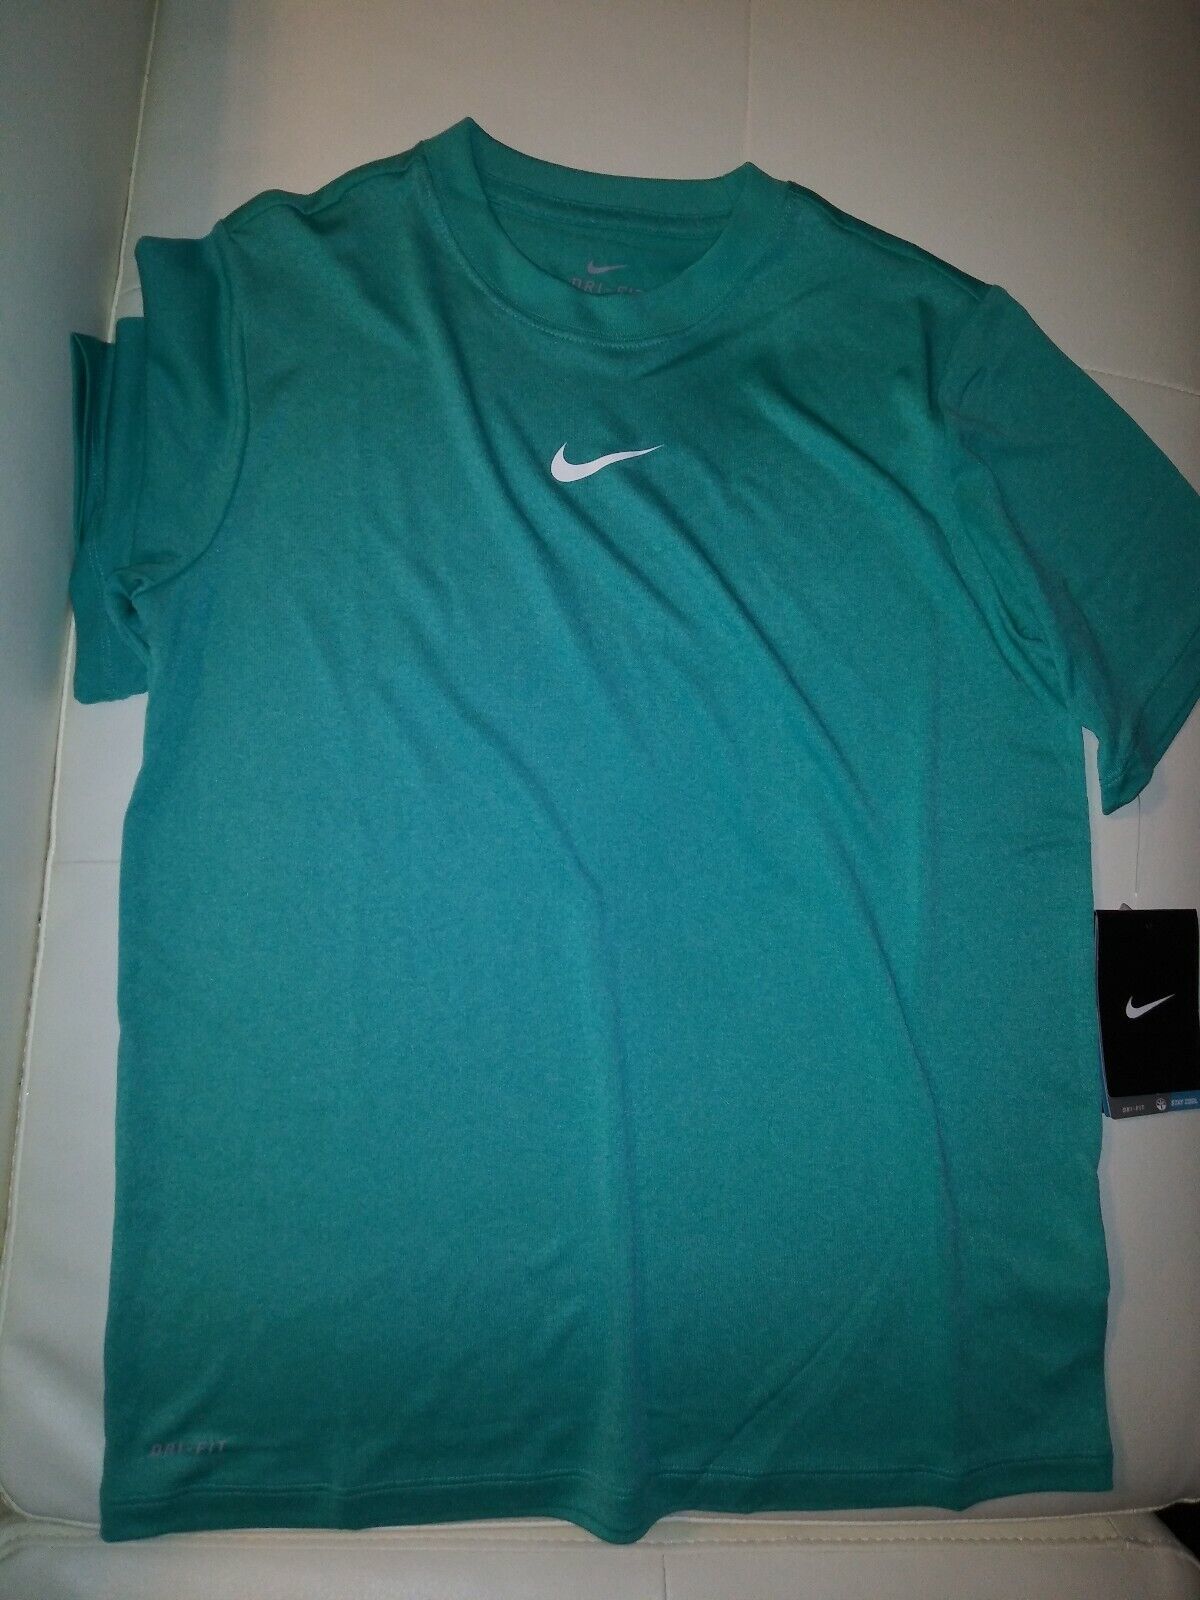 Primary image for Nike Boy's Dri-fit Athletic Shirt Sz Medium